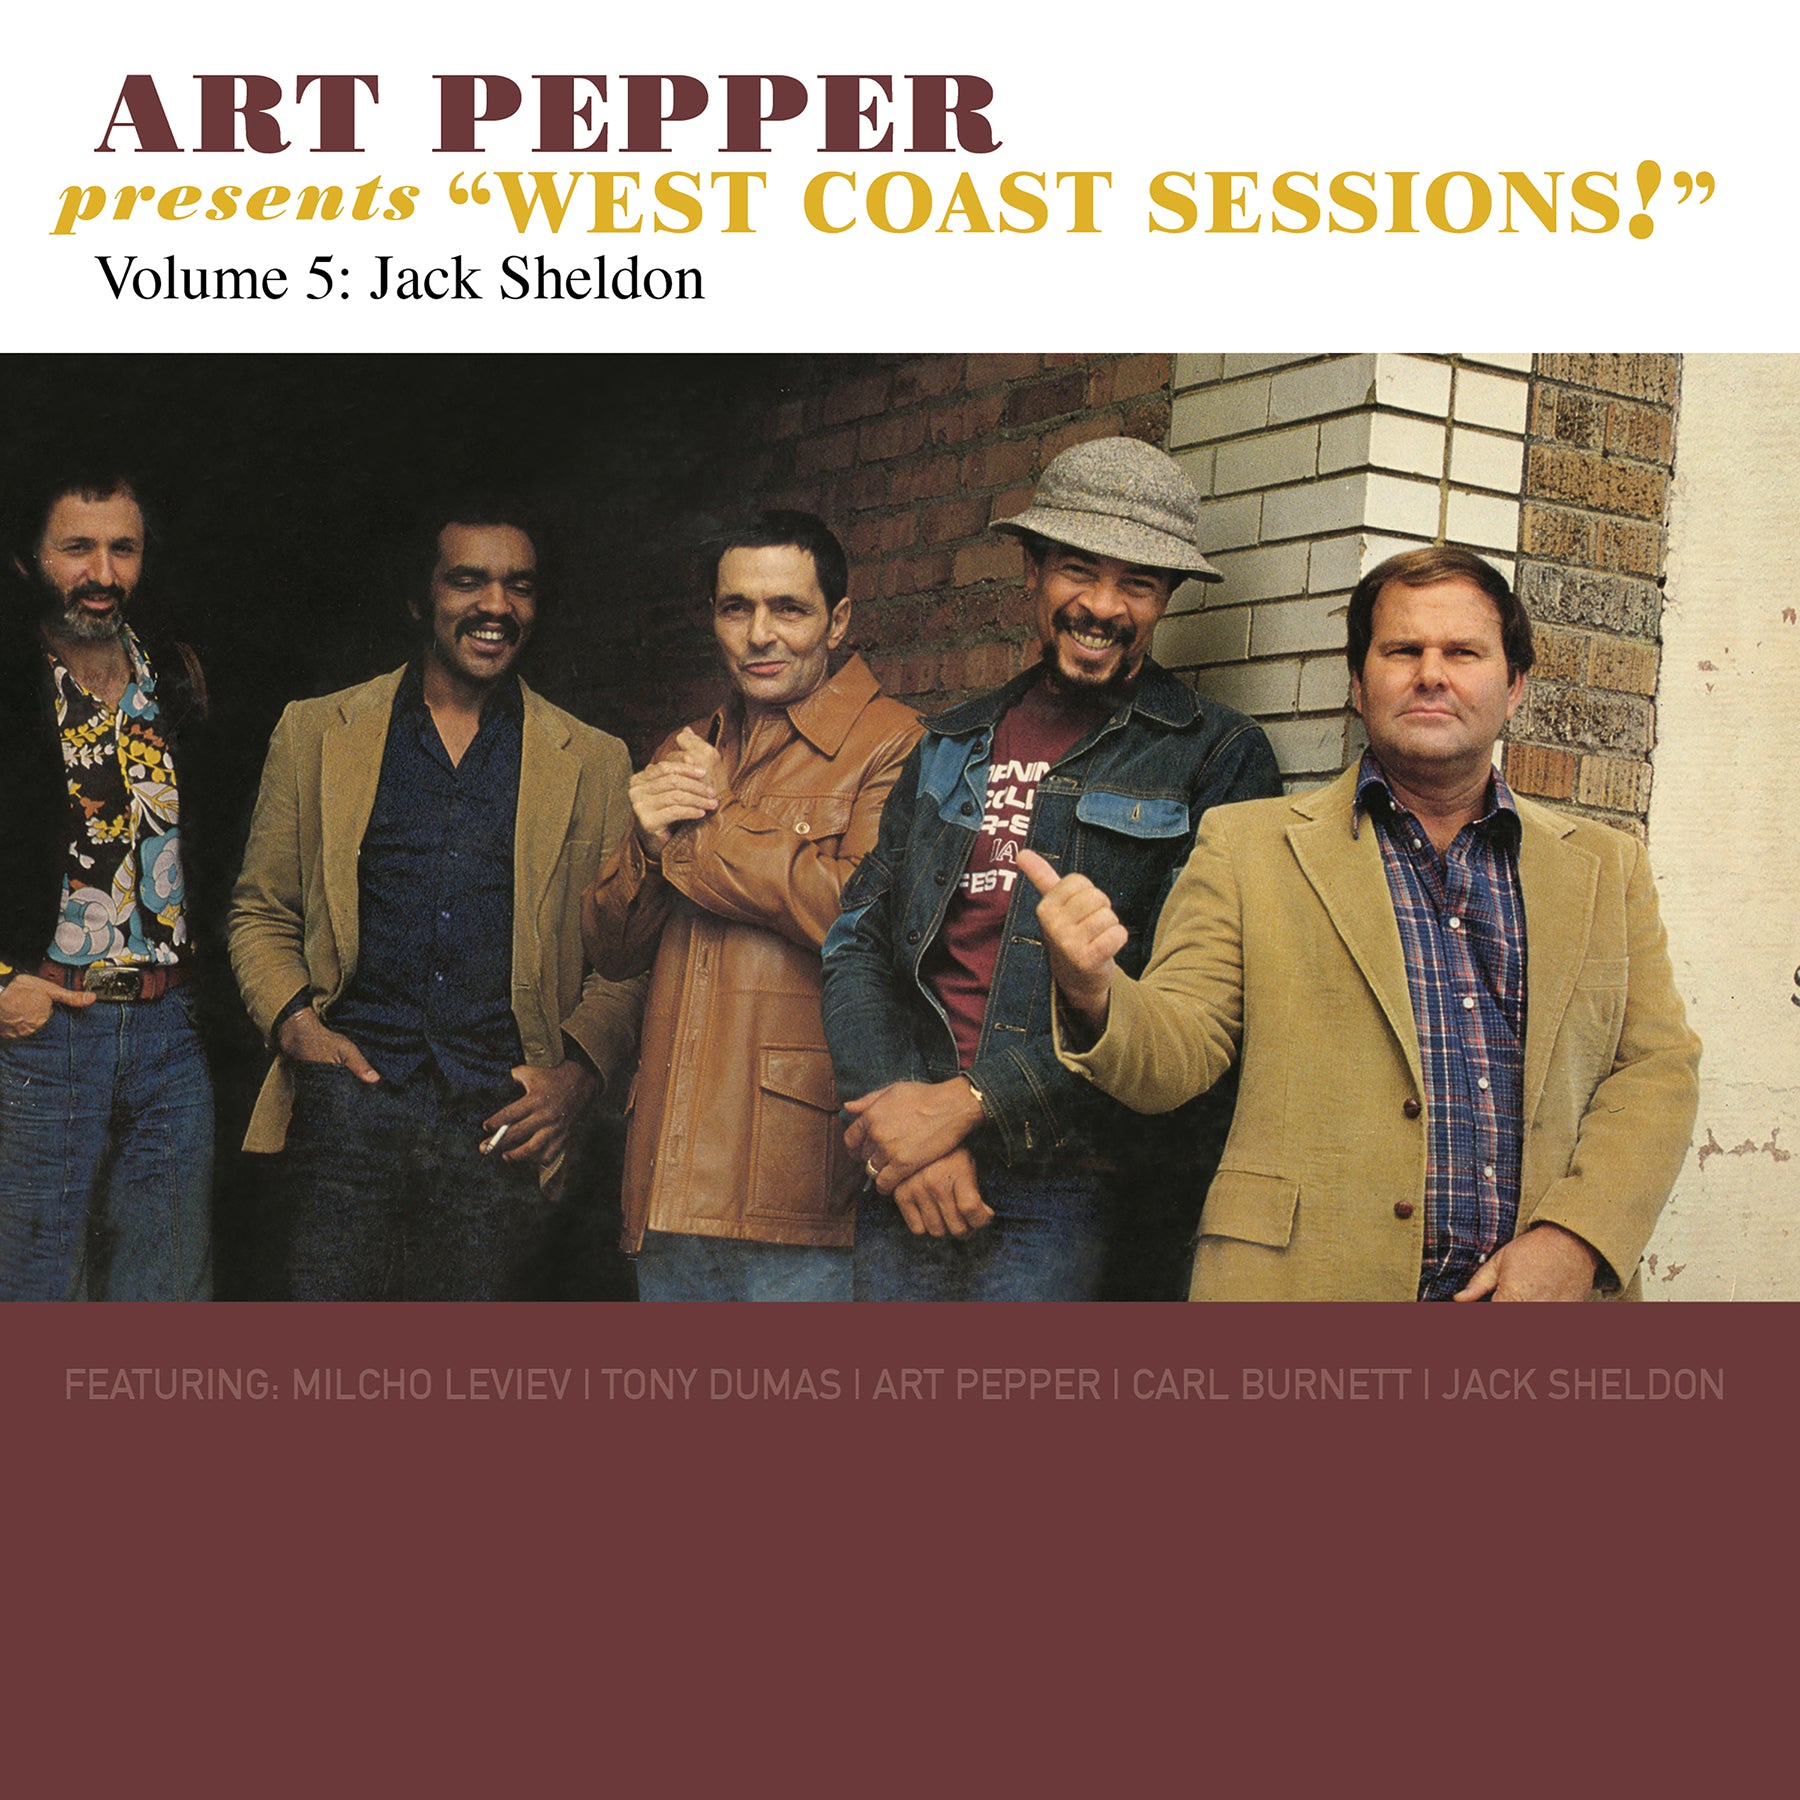 Art Pepper Presents “West Coast Sessions!” Volume 5: Jack Sheldon